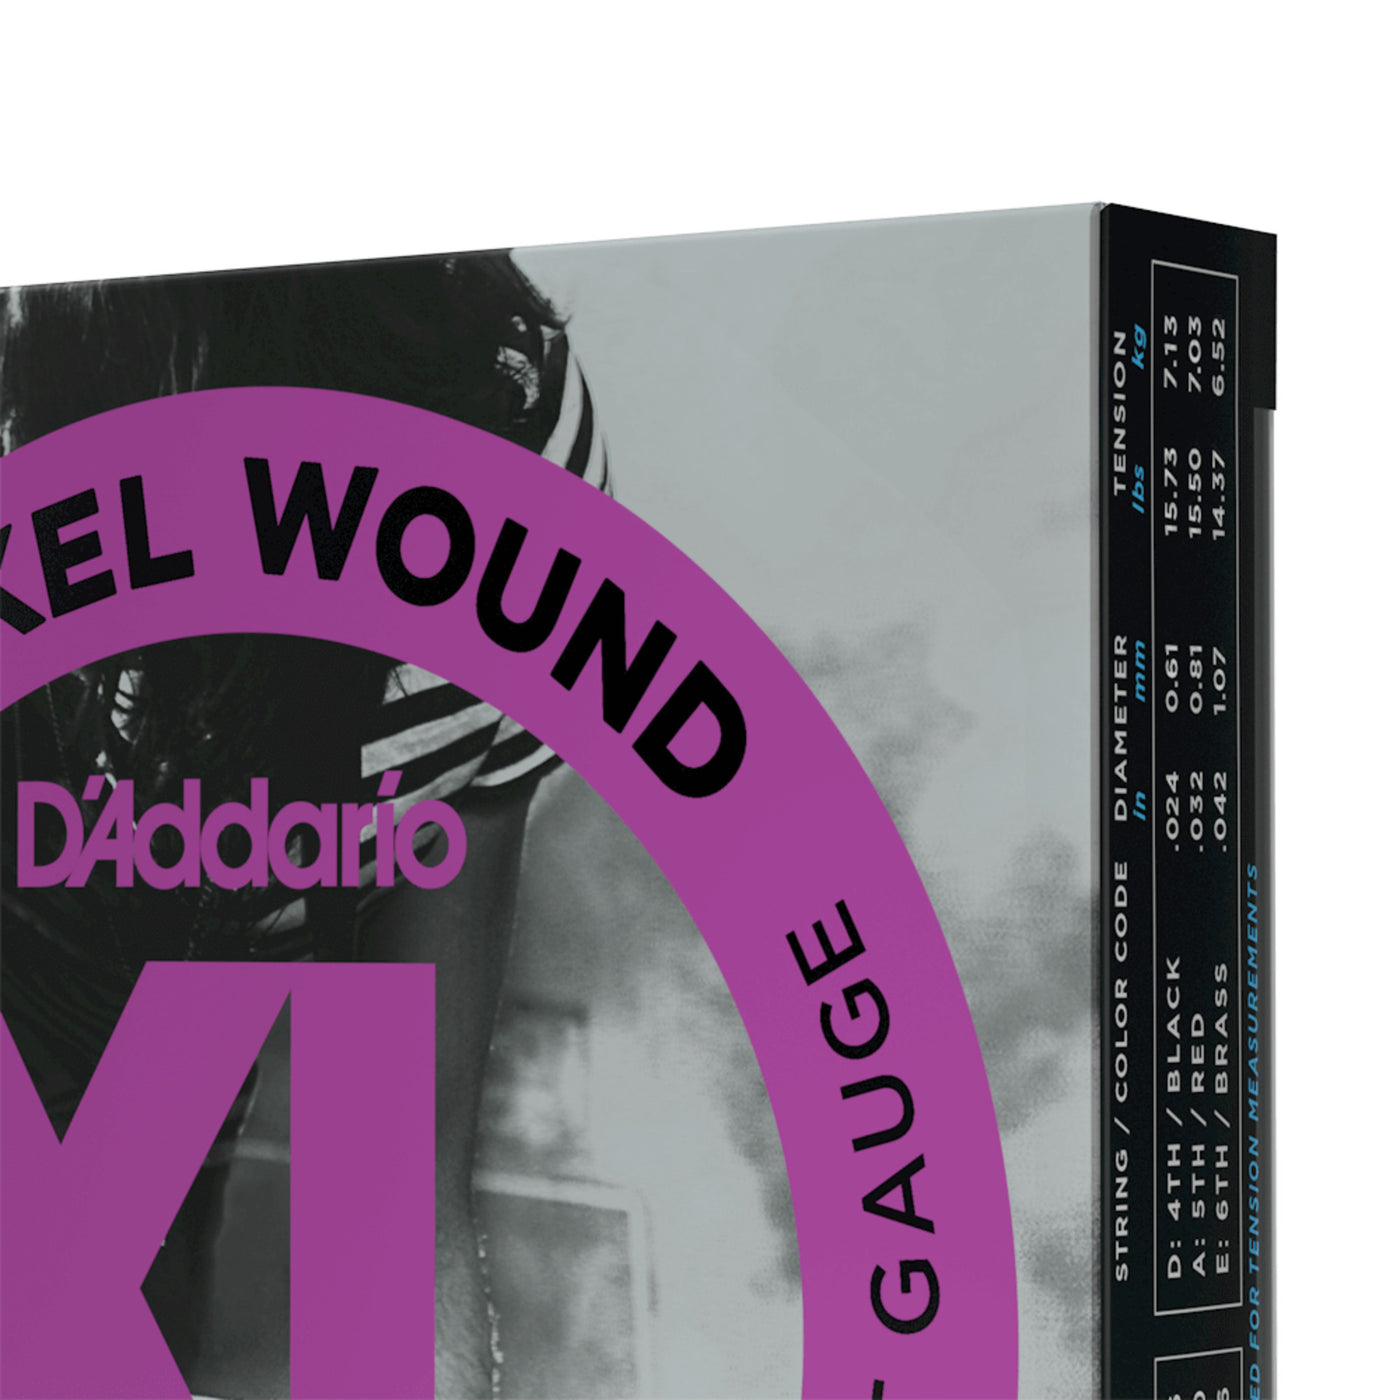 D'Addario Nickel Wound Electric Guitar Strings, Super Light, 09-42, 3 Sets (EXL120-3D)